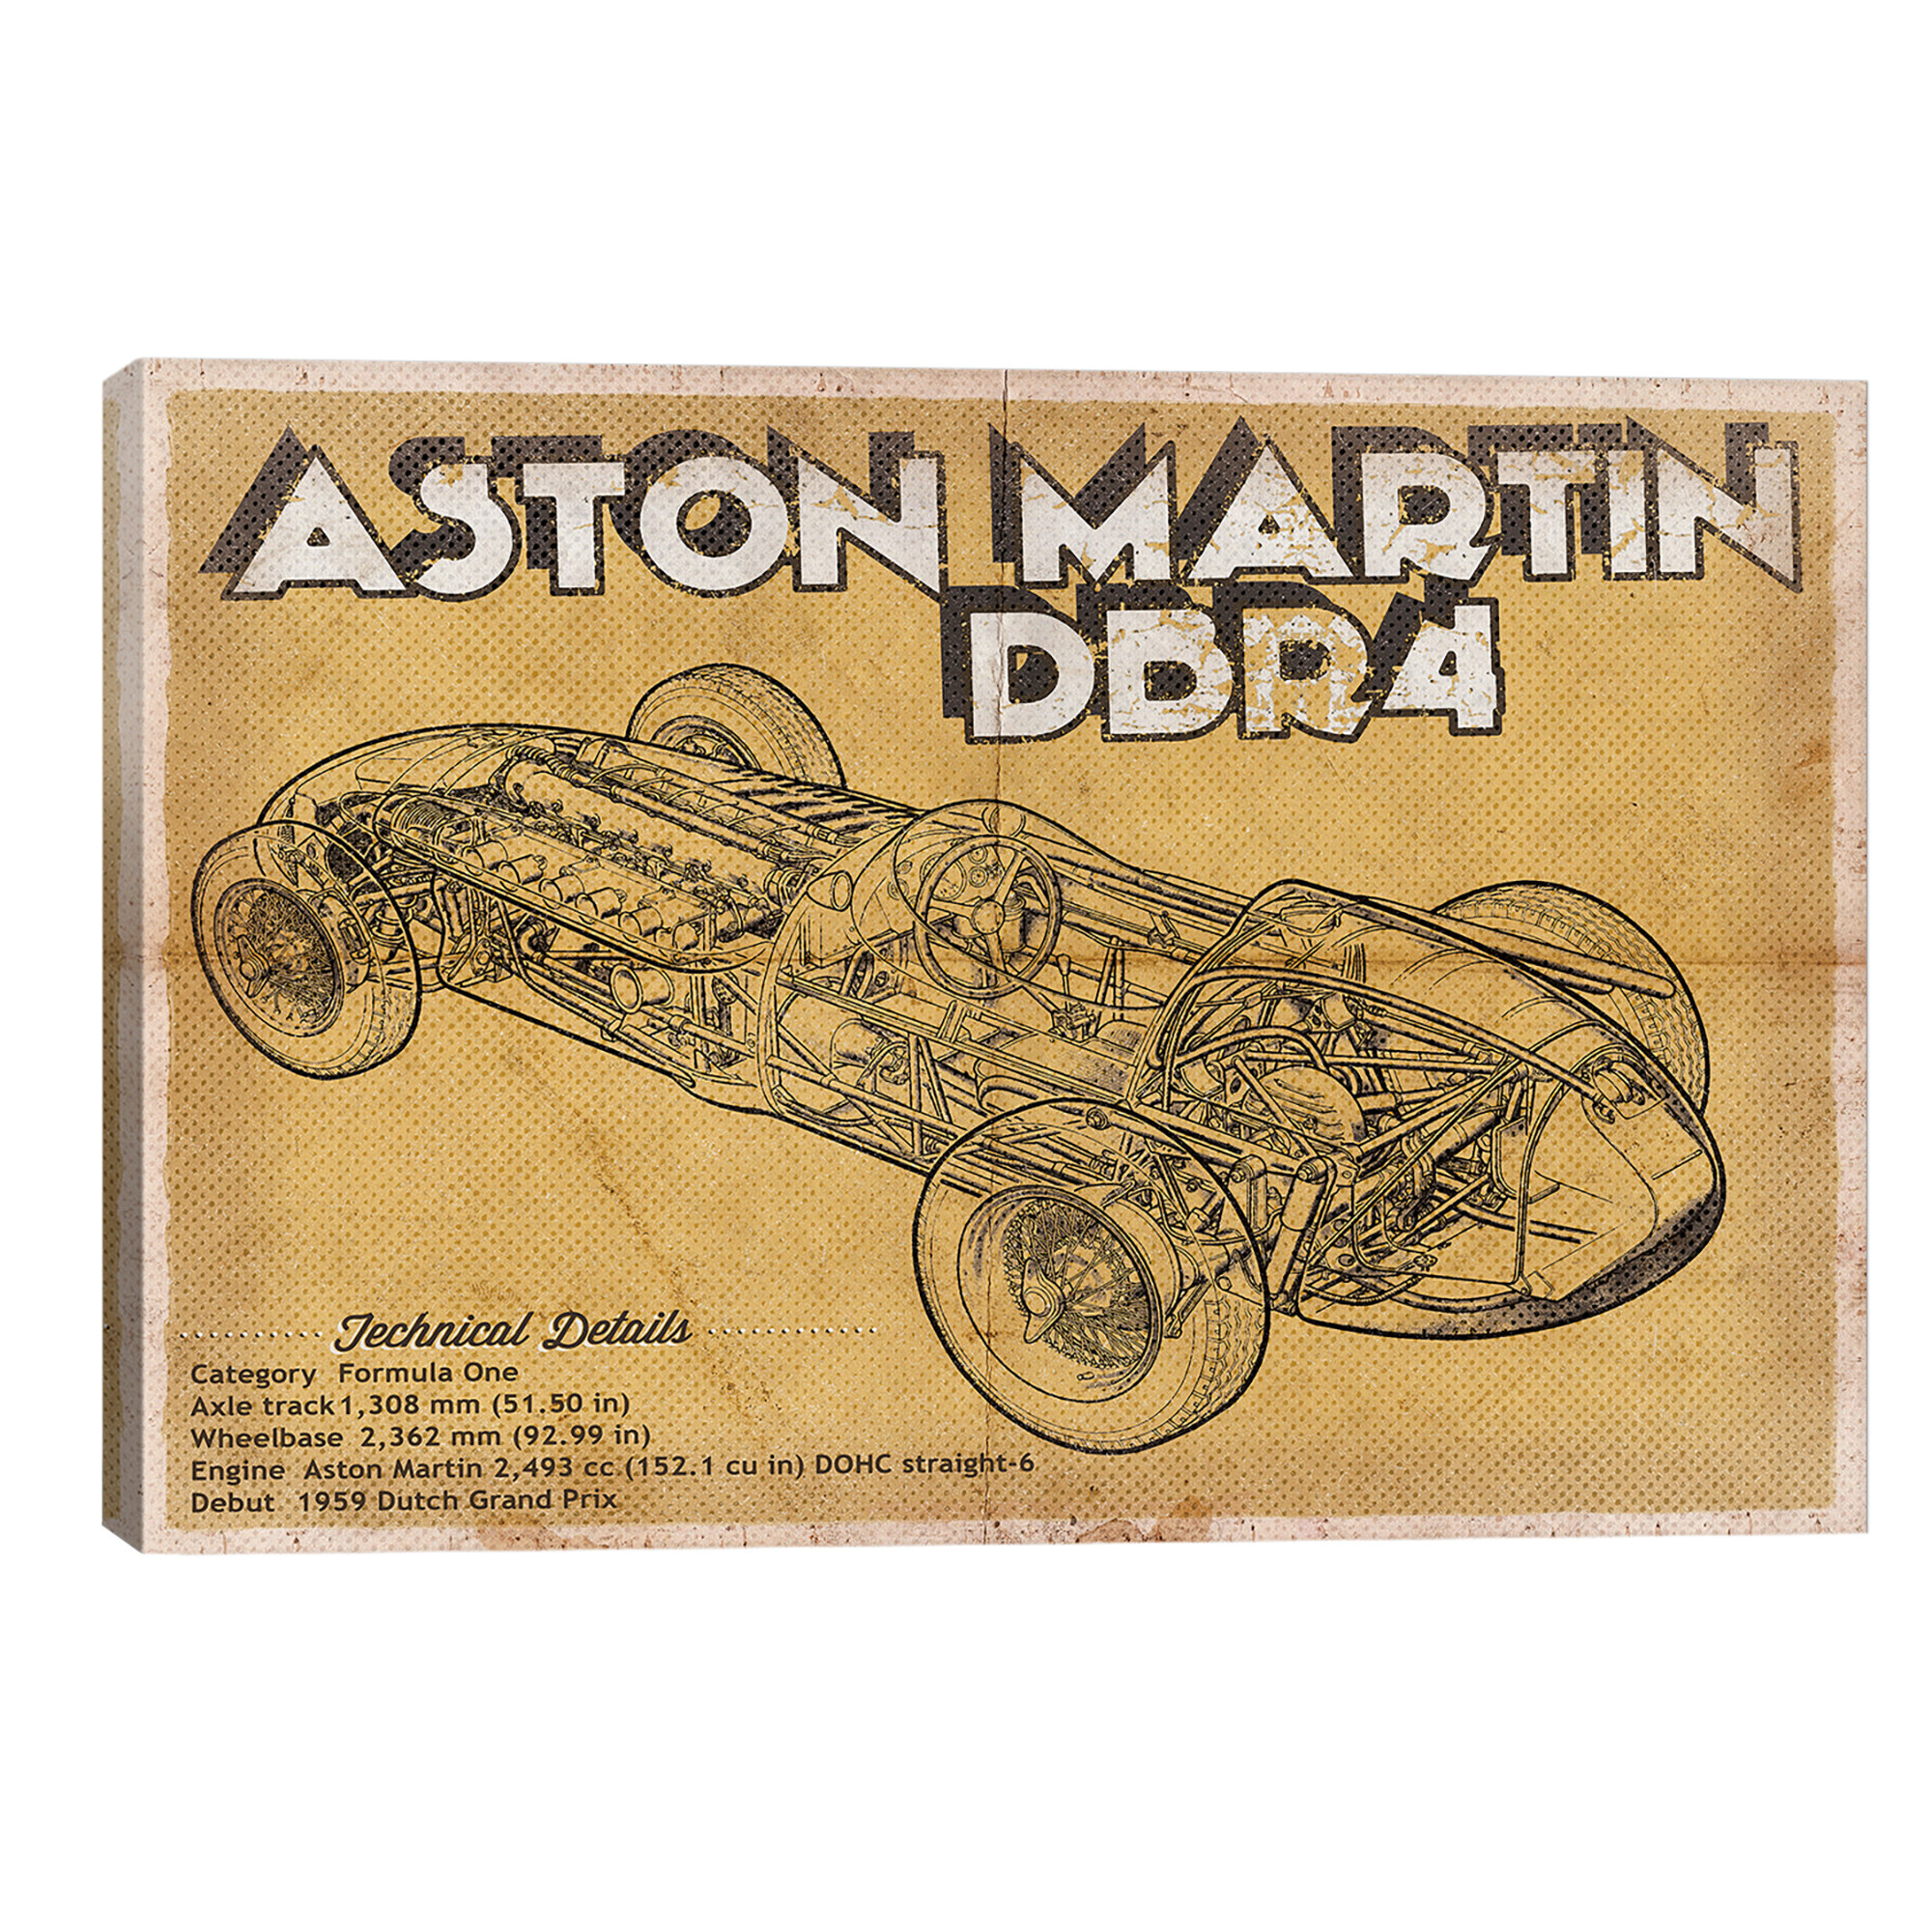 Get 1959 Aston Martin Dbr4 Wallpaper Images